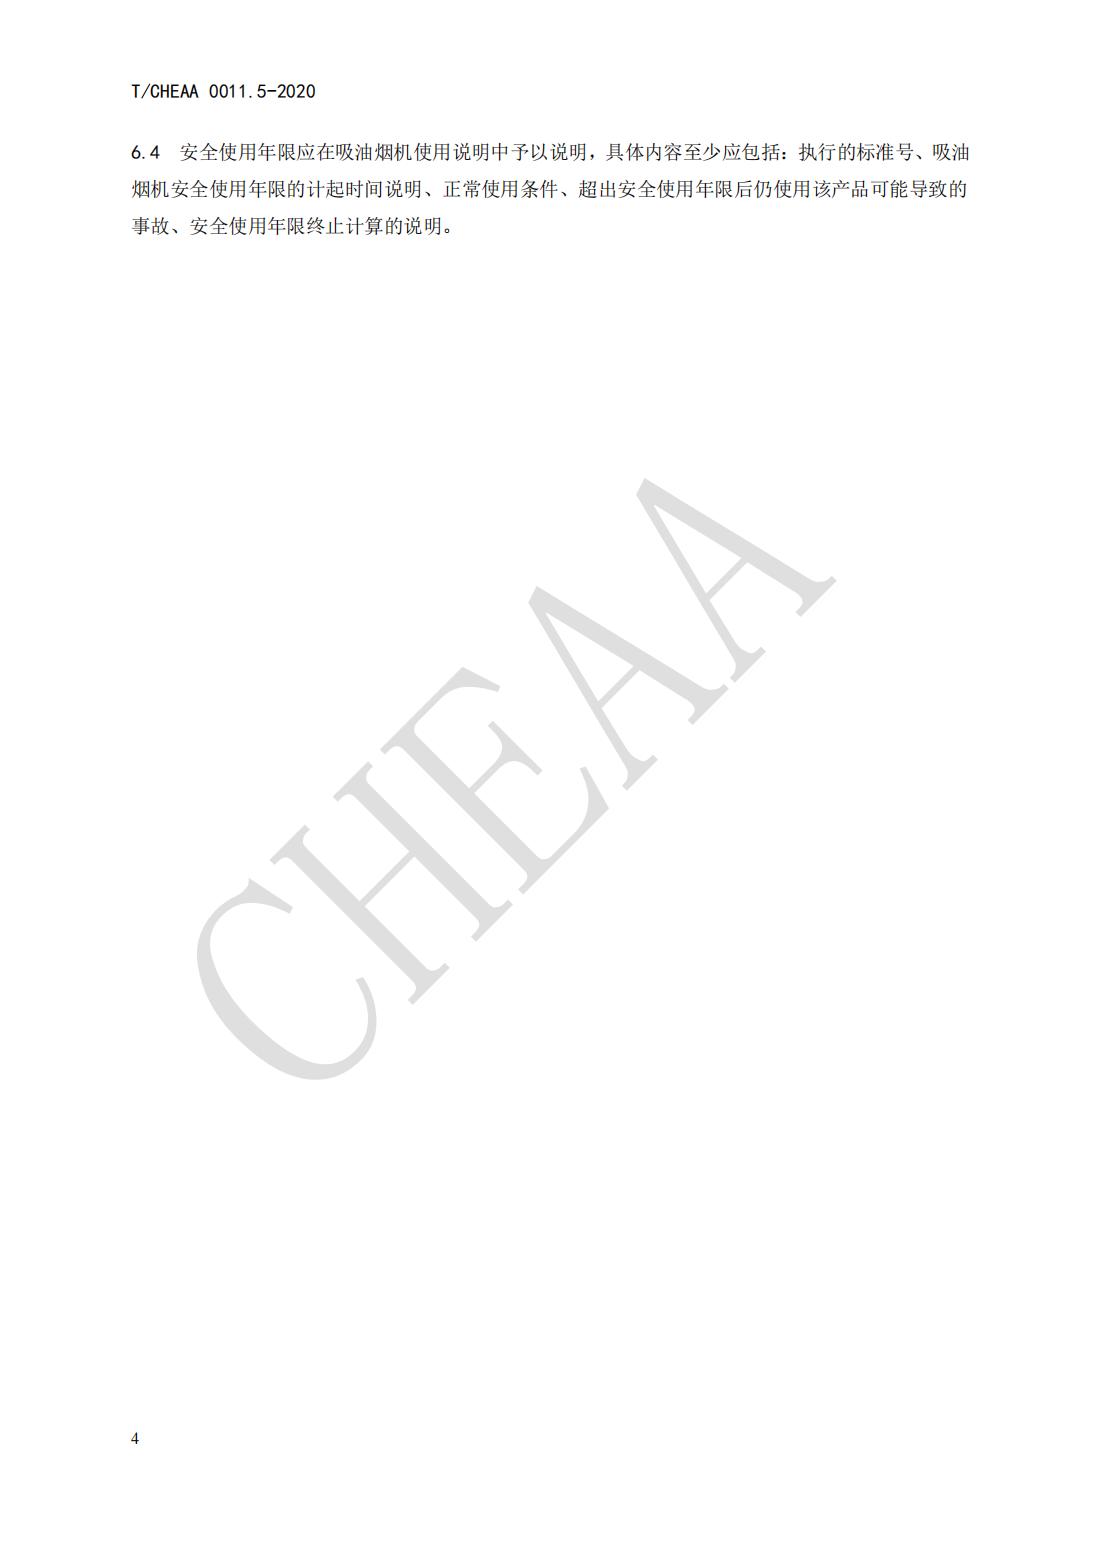 T CHEAA 0011.5-2020《家用电器安全使用年限 第5部分：吸油烟机》(图10)